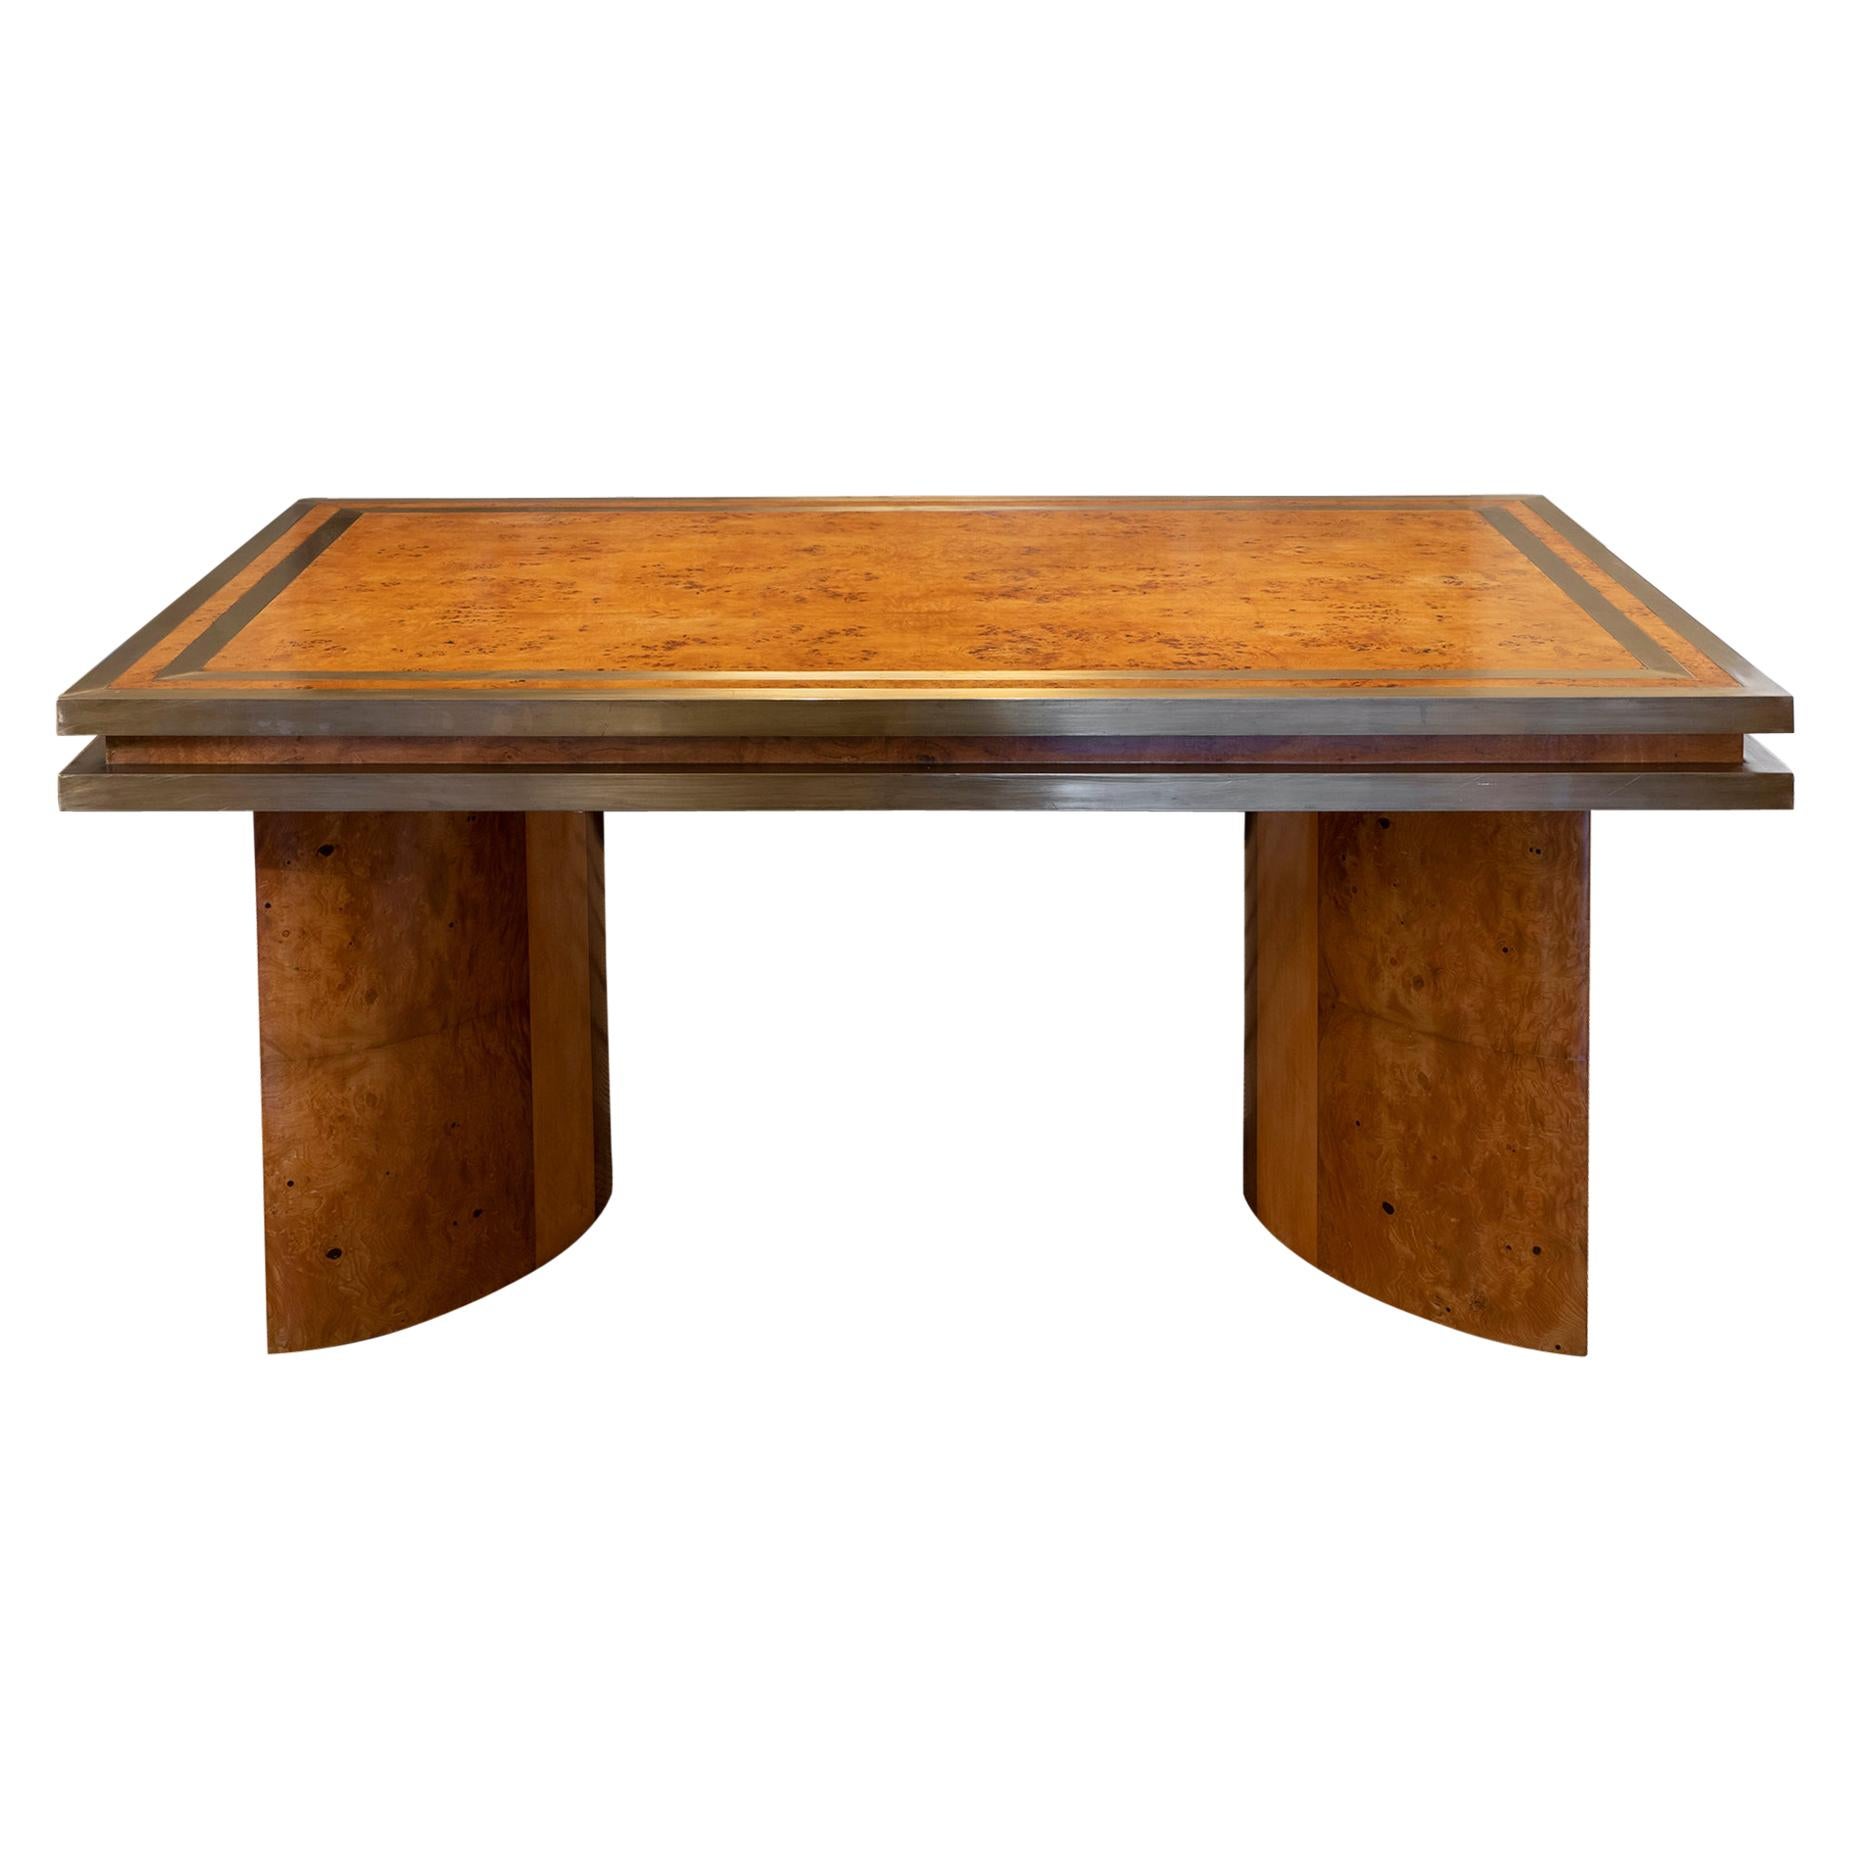 1950s Italian Burl wood Dining Table, Brass Details